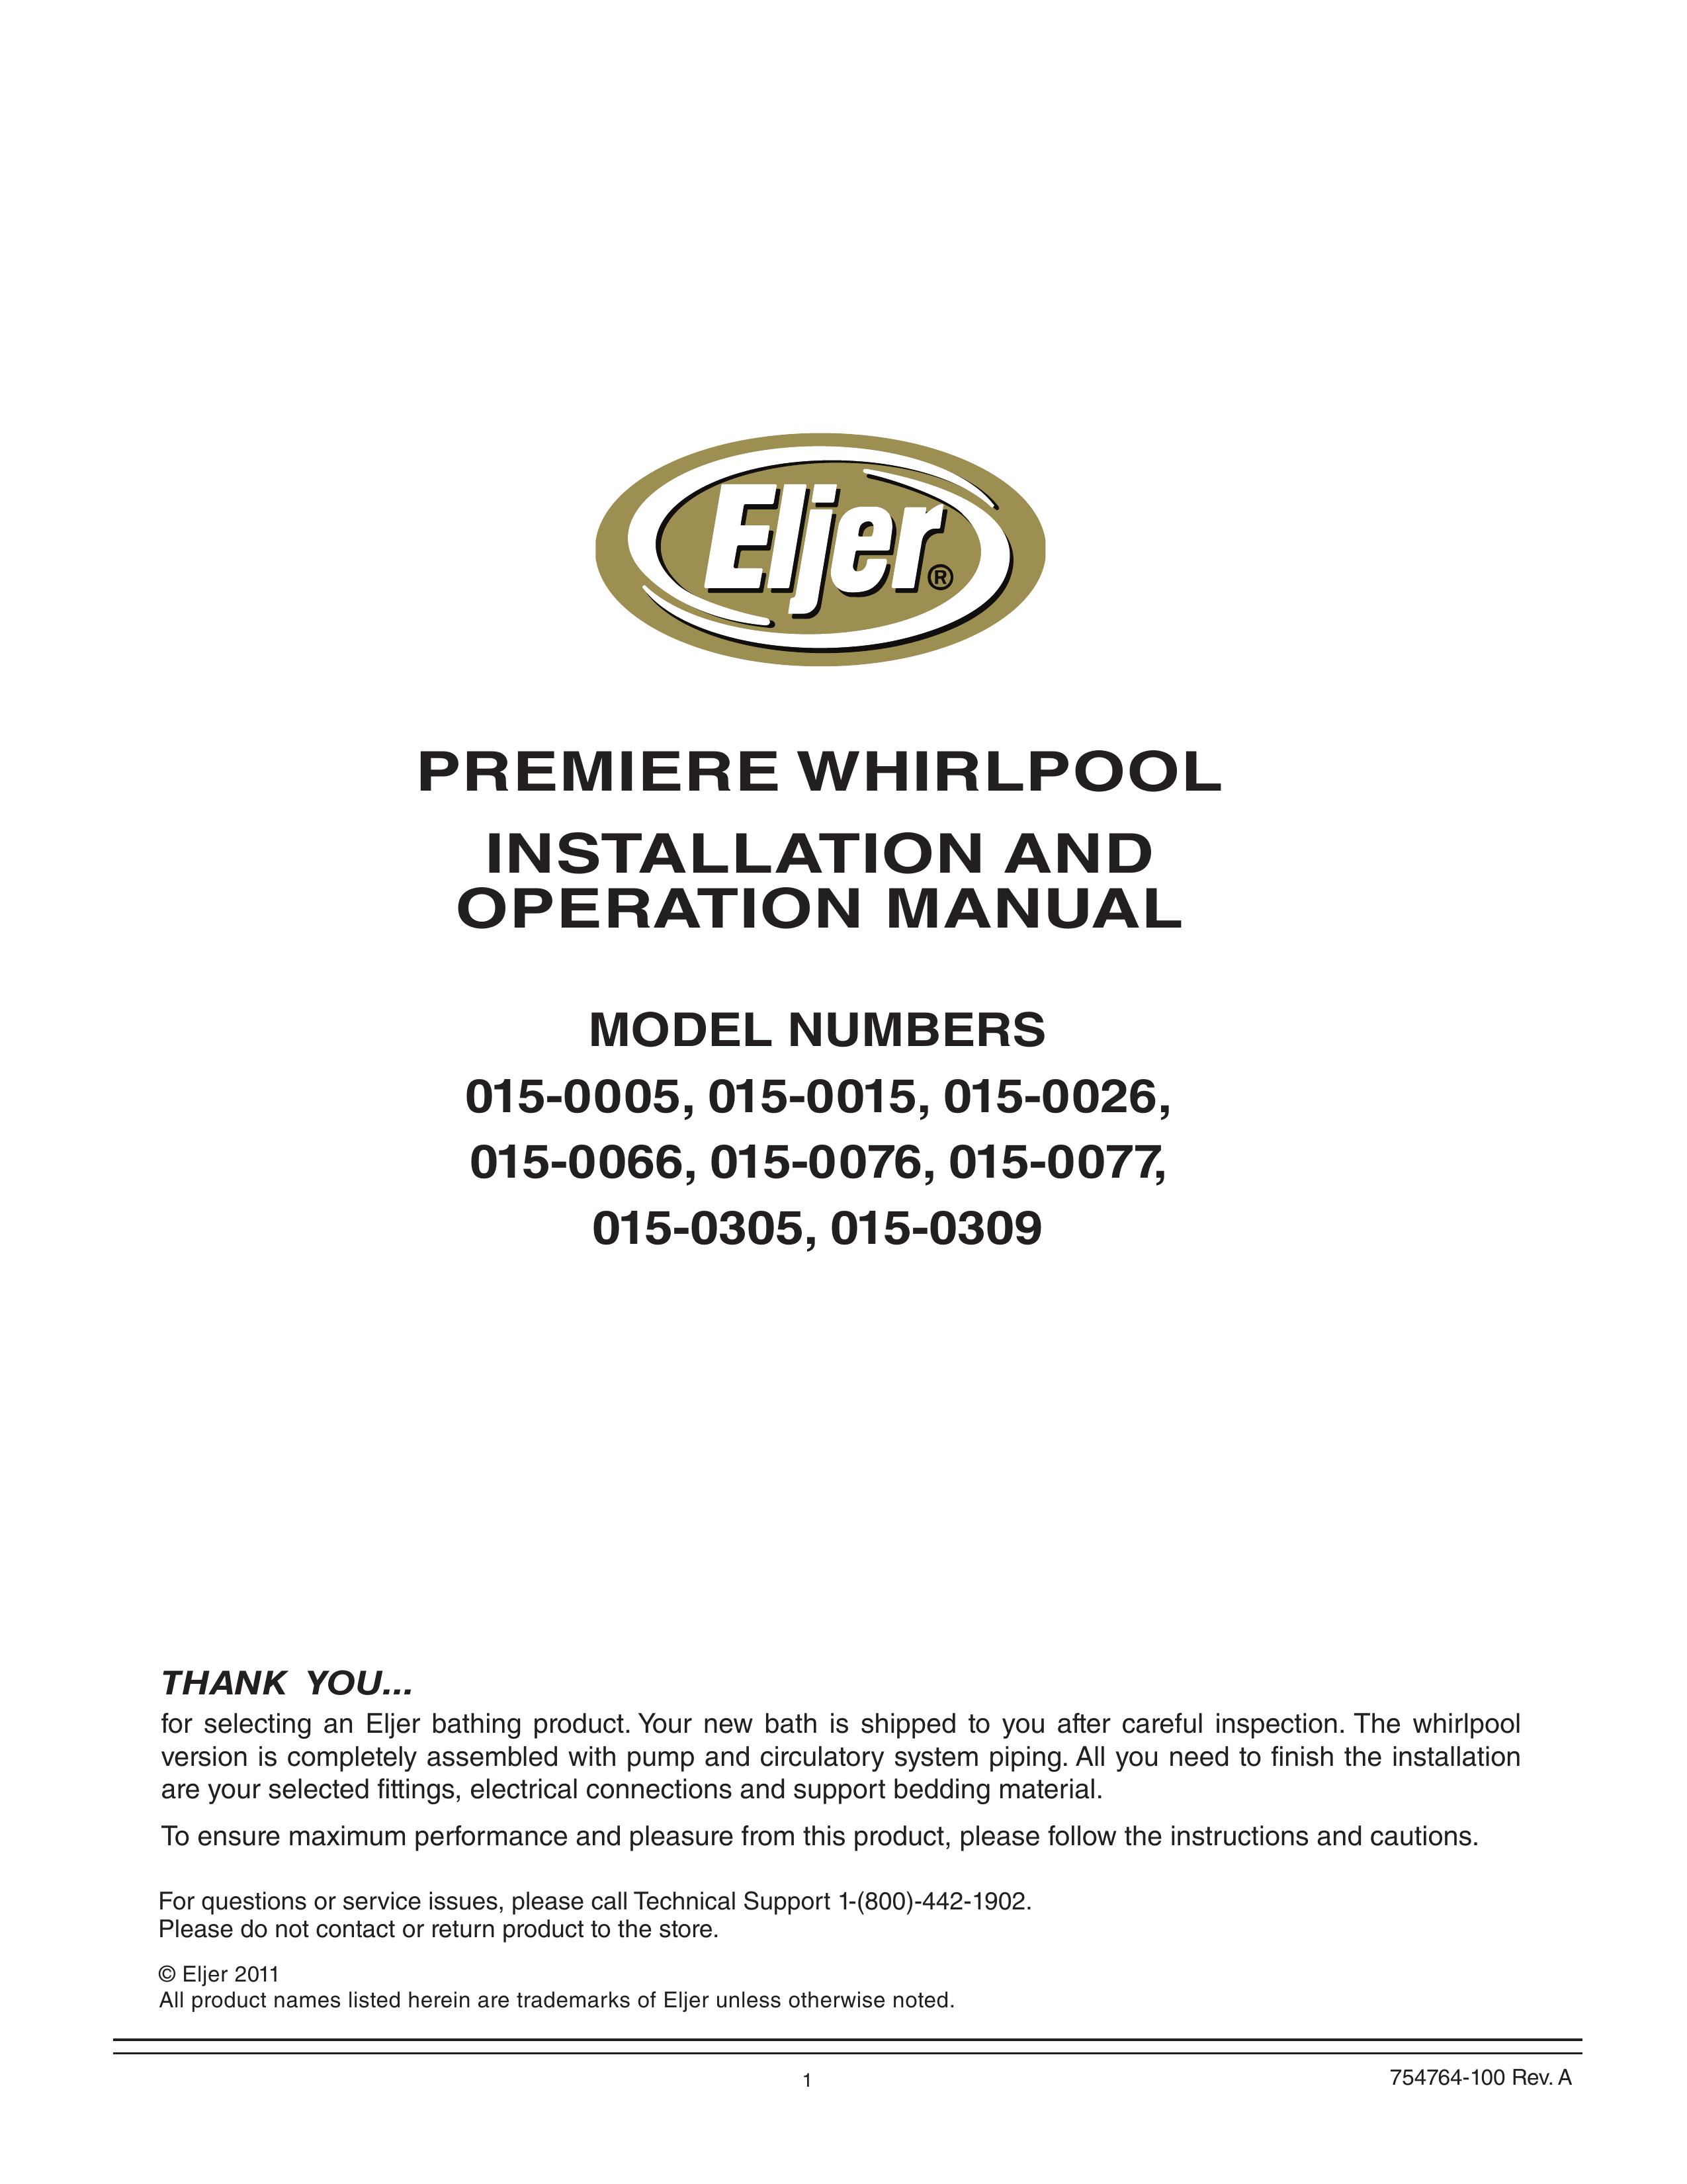 Whirlpool 015-0005 Personal Lift User Manual